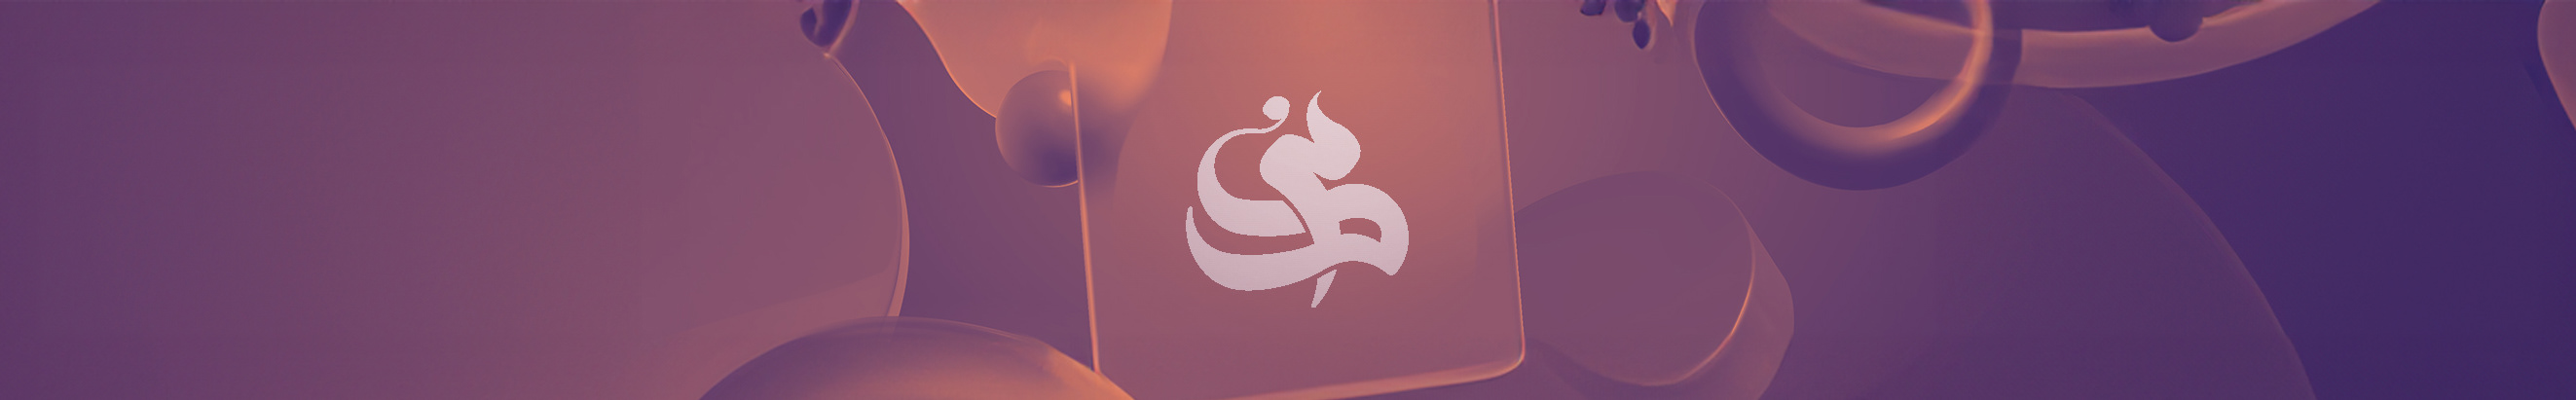 Mustafa kamel's profile banner